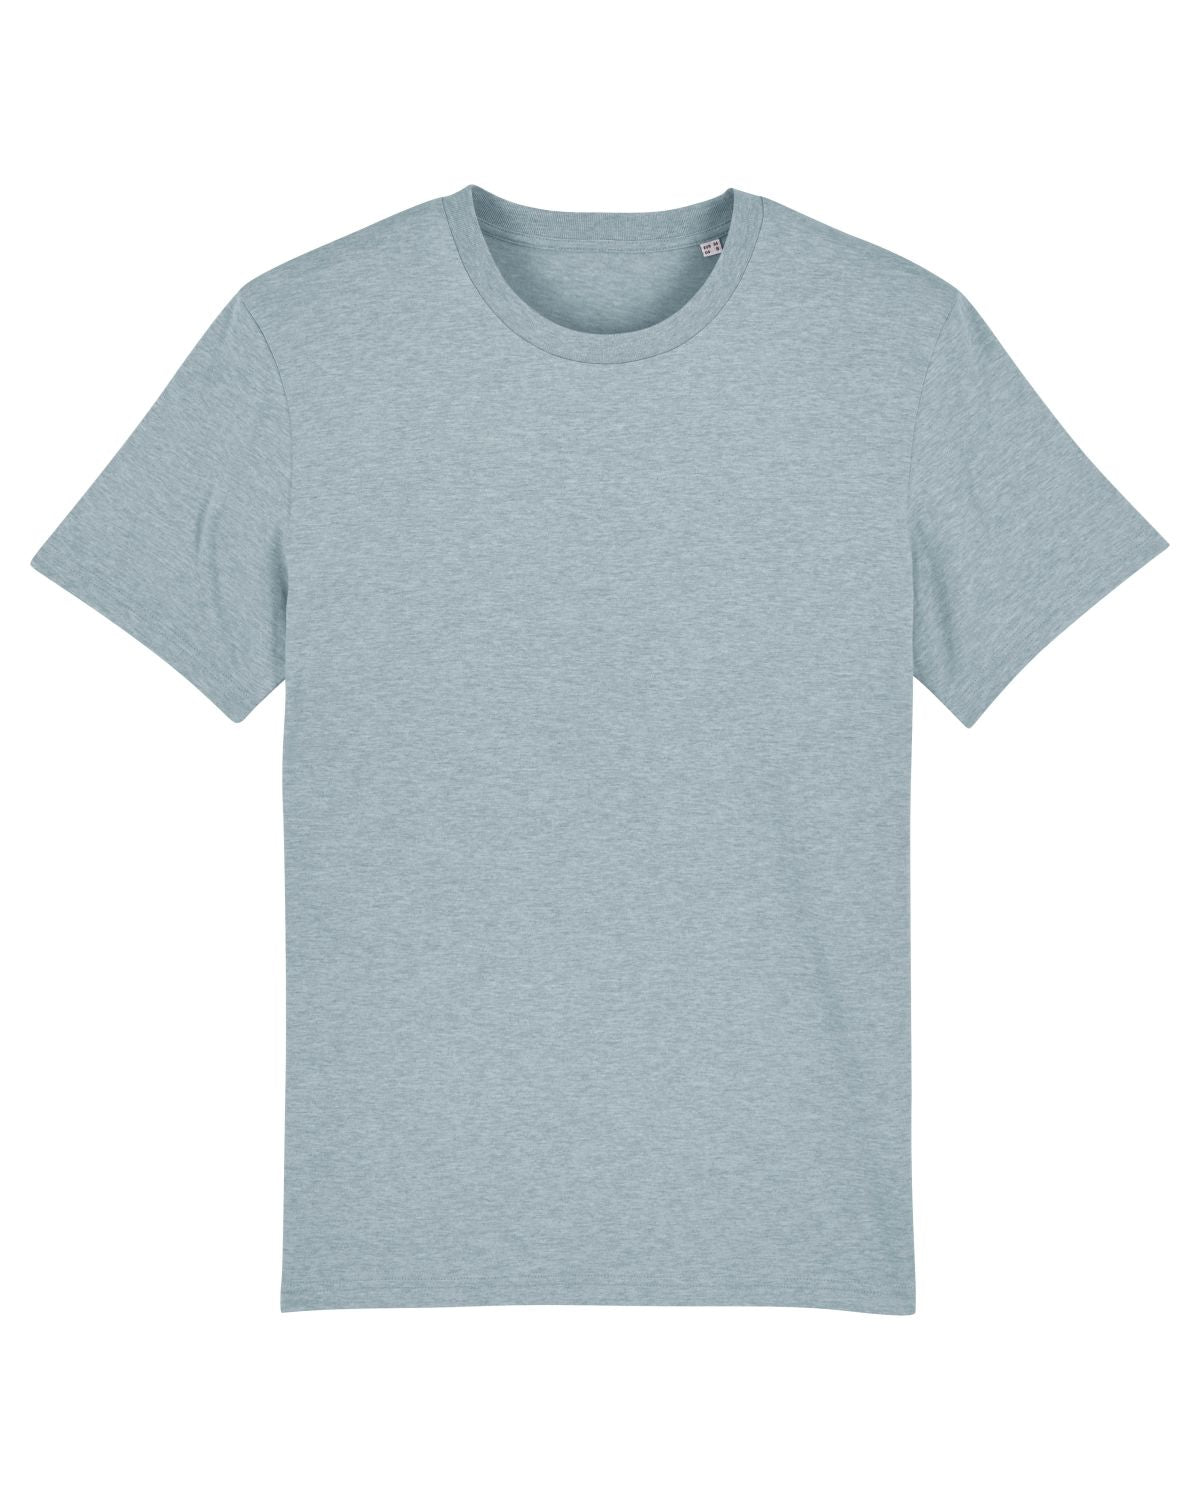 CREATOR - T-Shirt - 180g